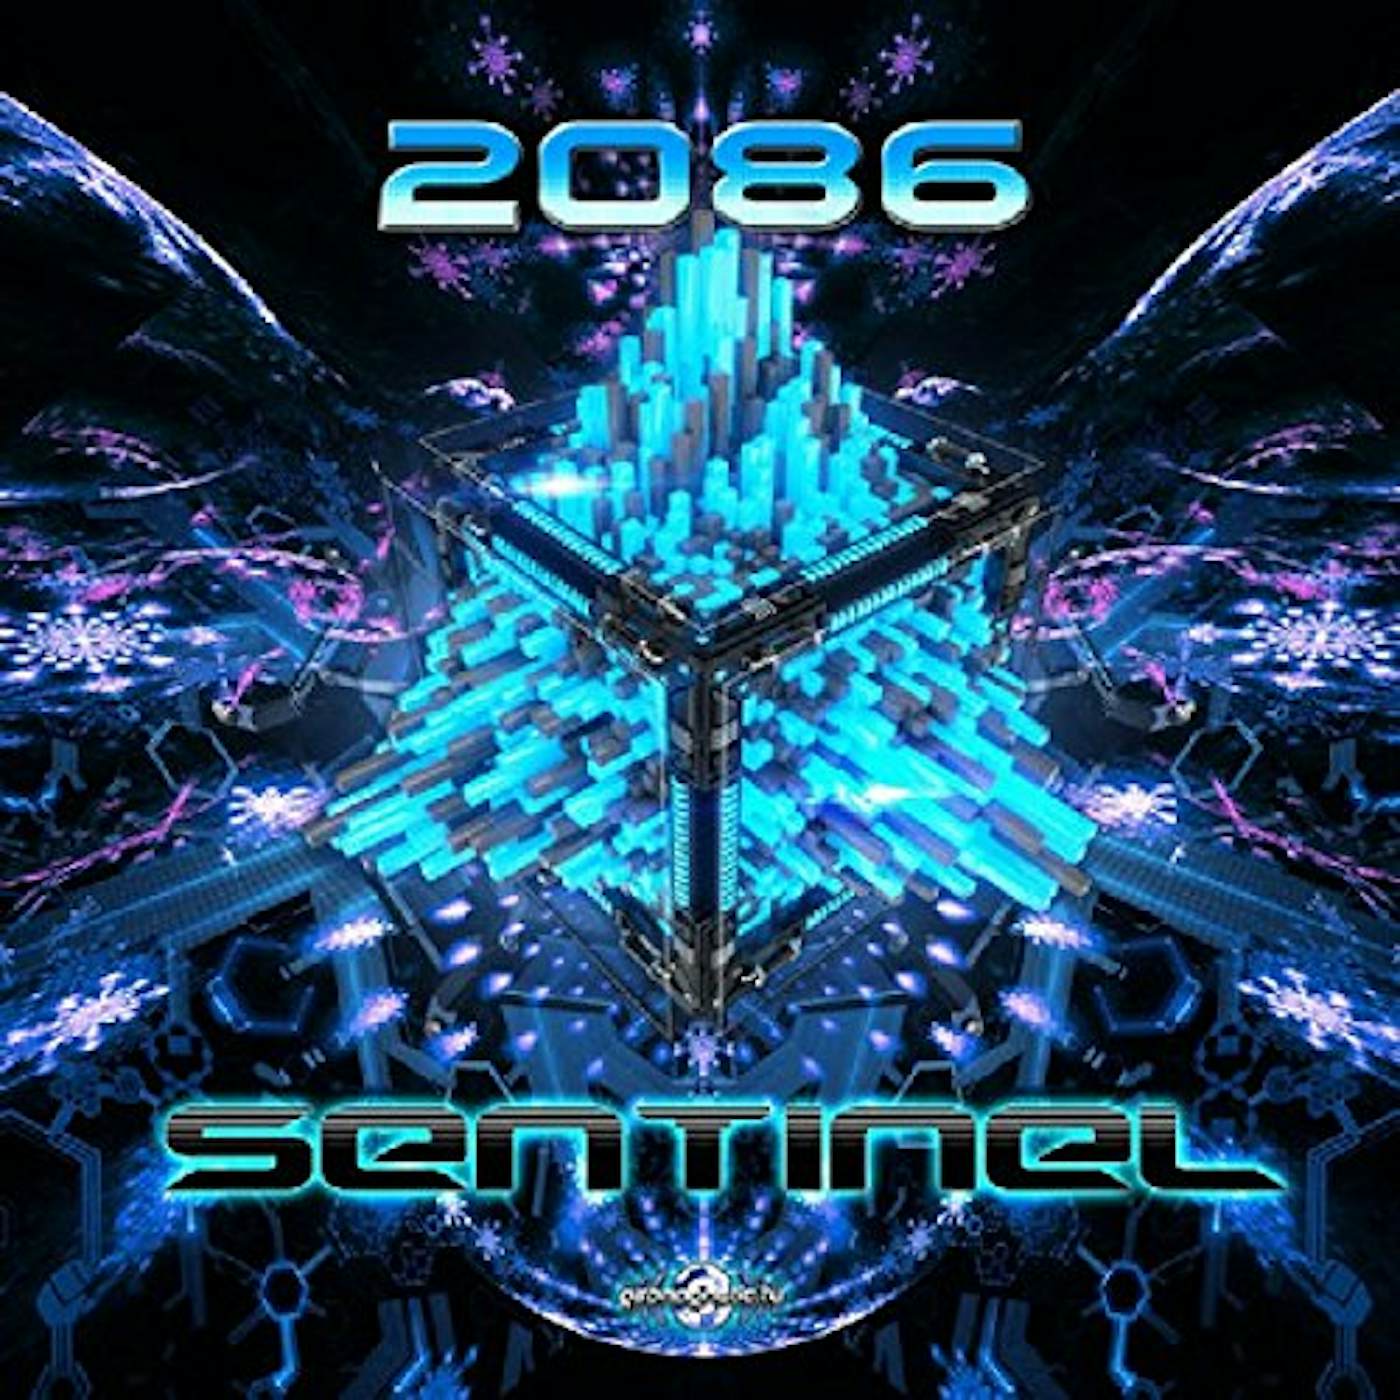  Sentinel 2086 CD